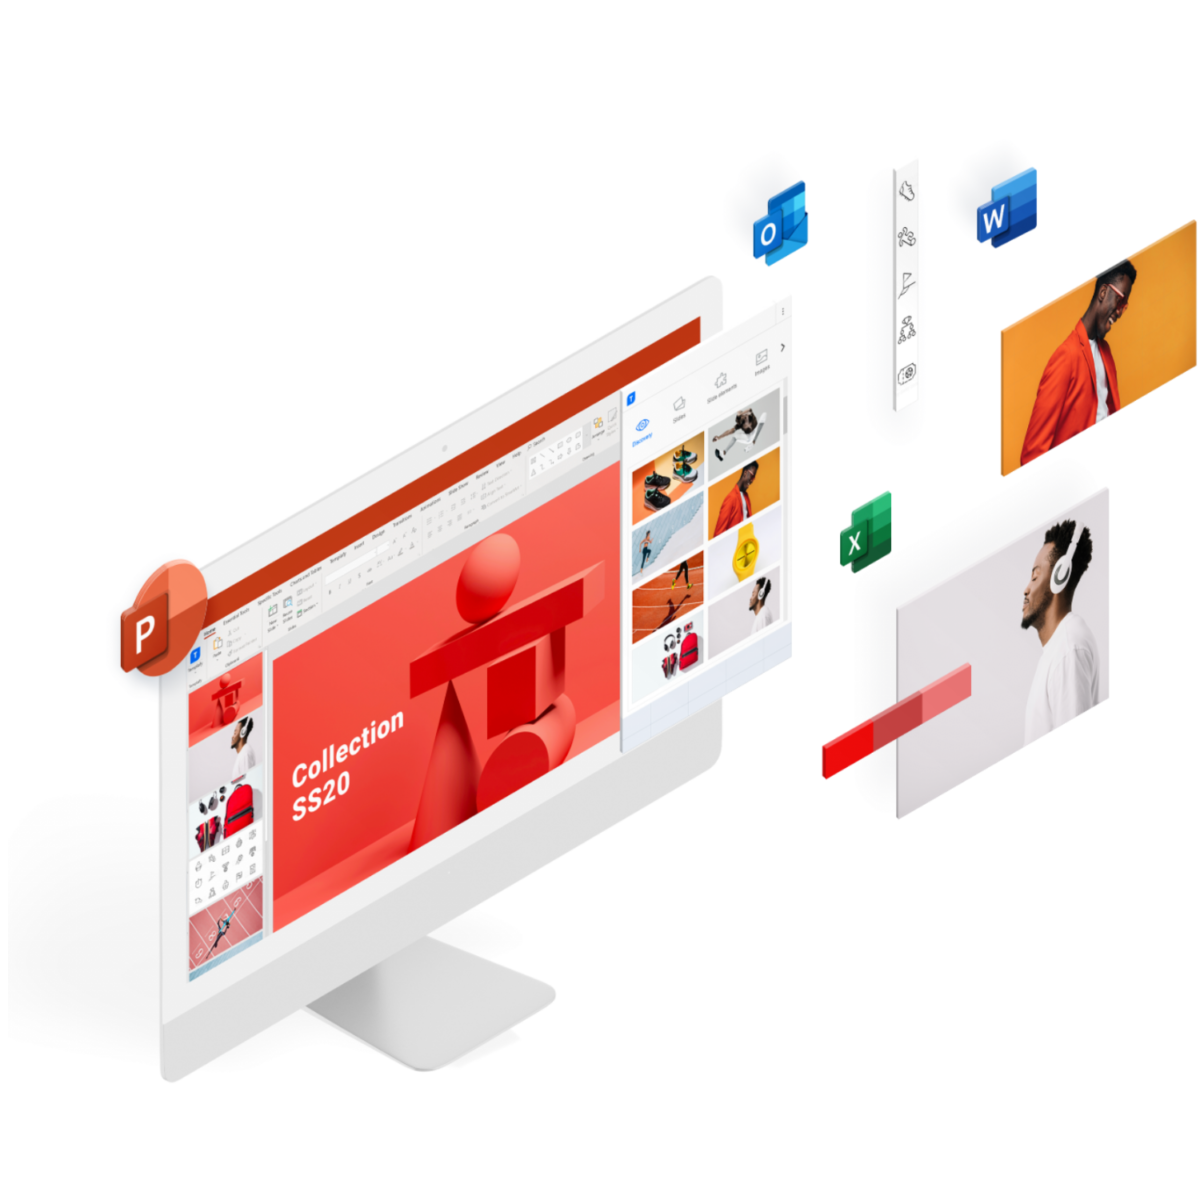 Graphic representing digital brand assets on a desktop screen